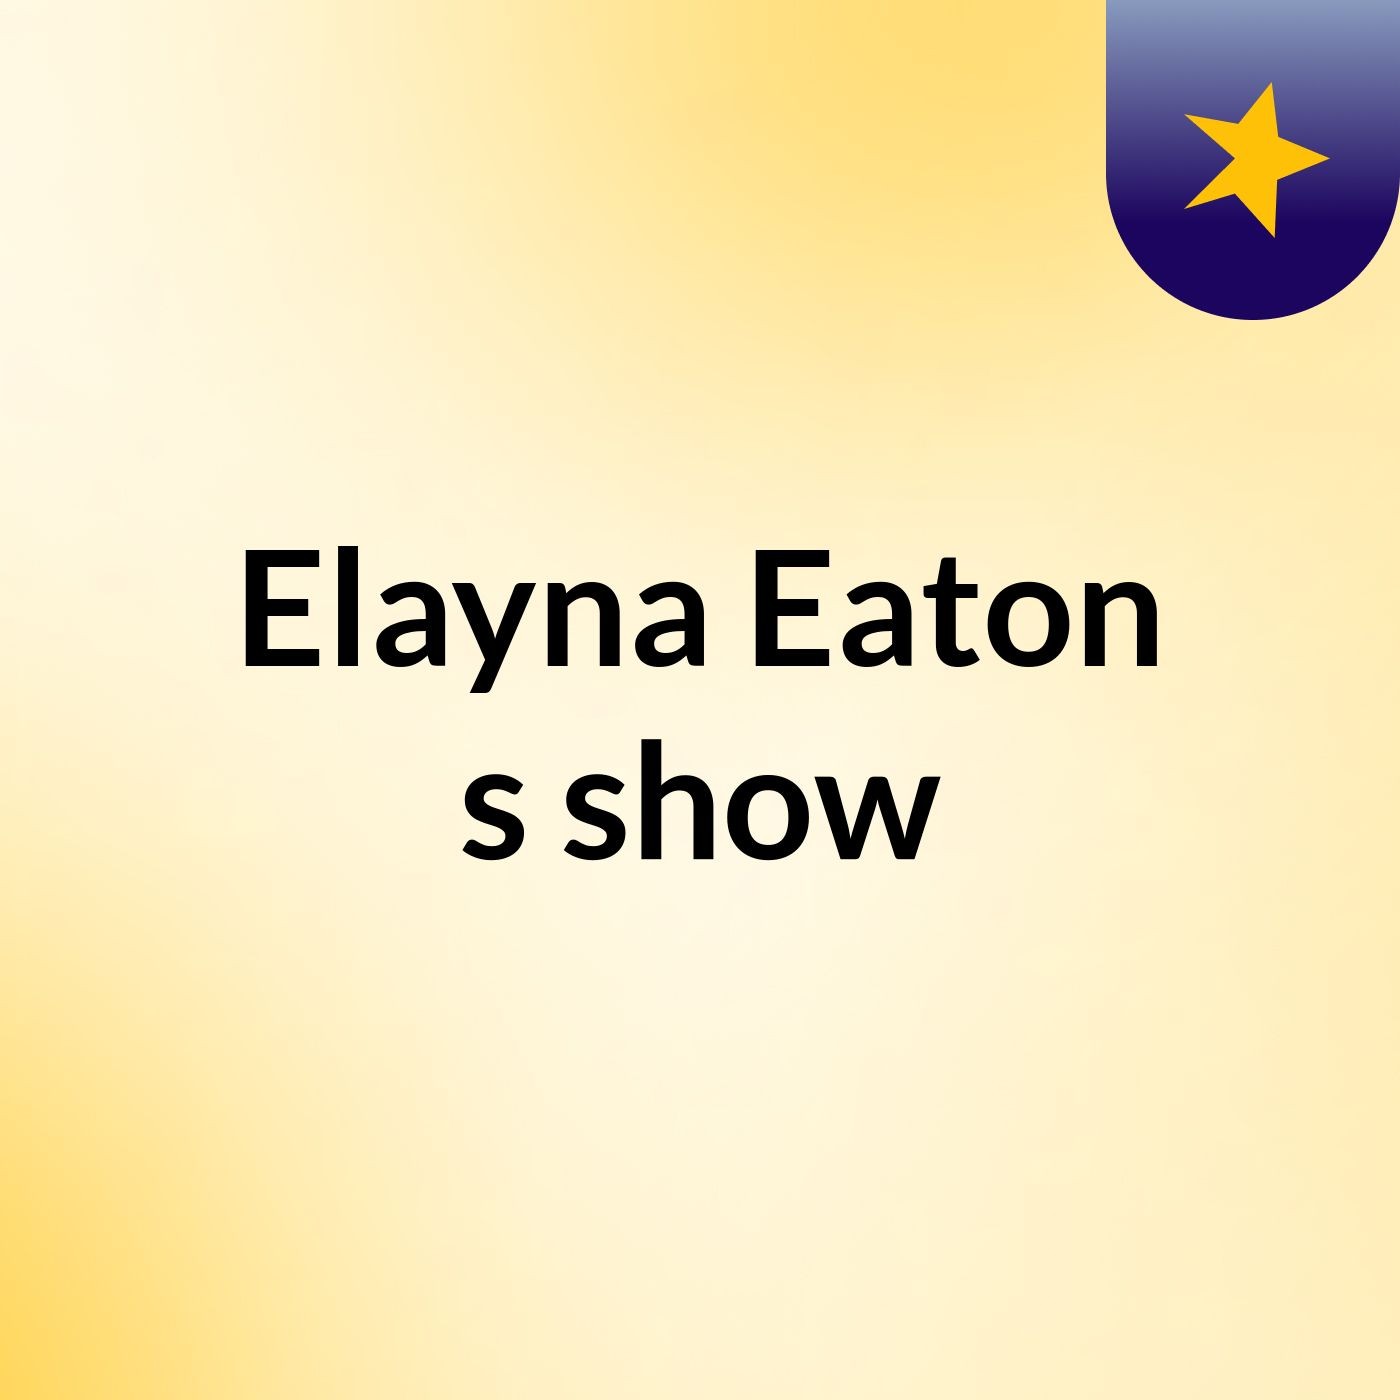 Elayna Eaton's show